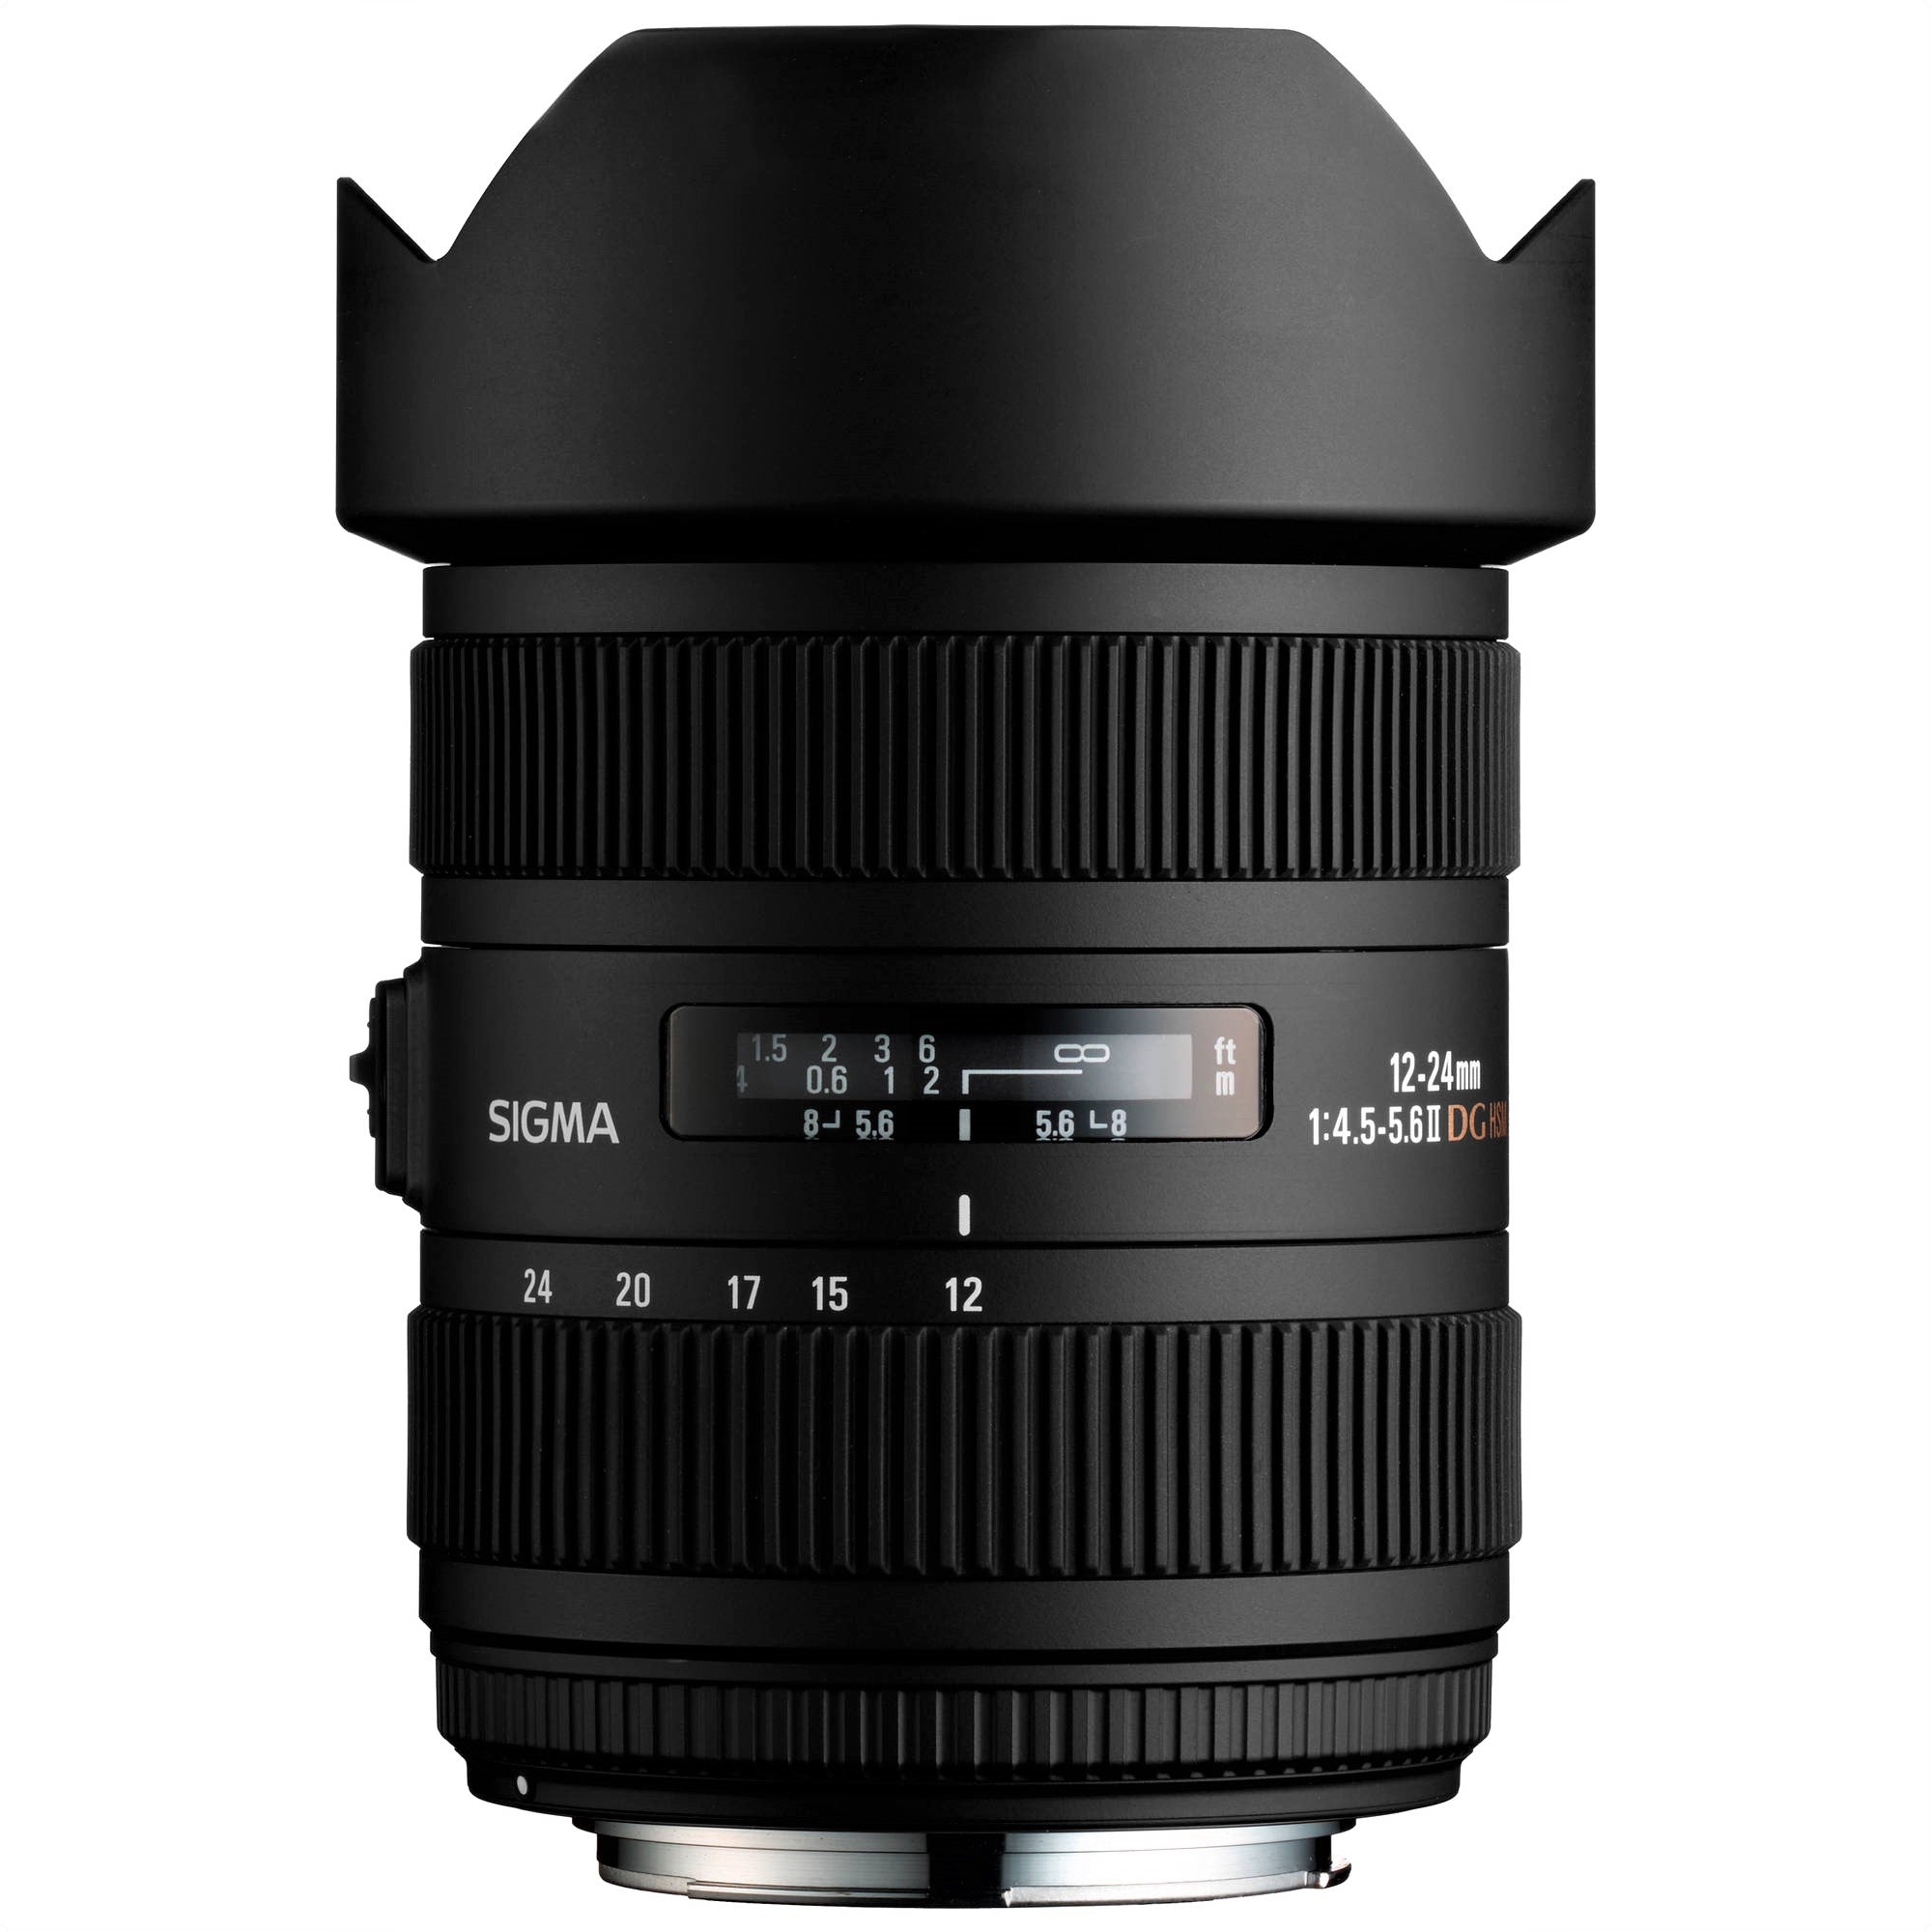 Sigma 12-24mm F4.5-5.6 II EX DG ASP-HSM Lens for Canon